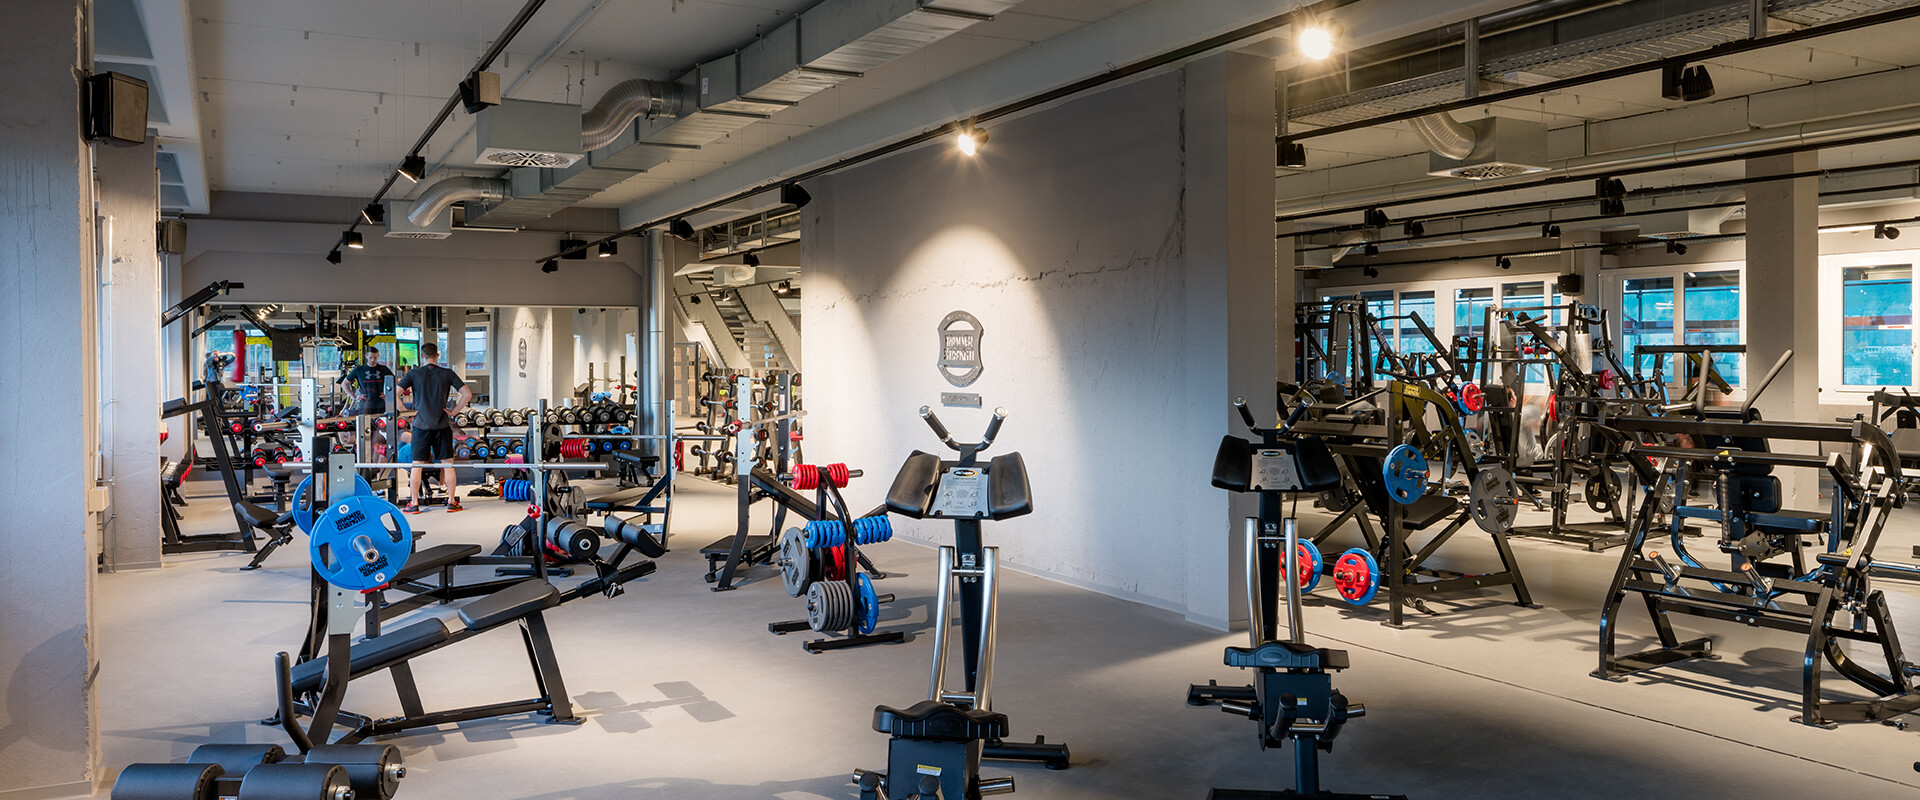 Kundenbild groß 3 INJOY Xpress Fitnessstudio Erfurt